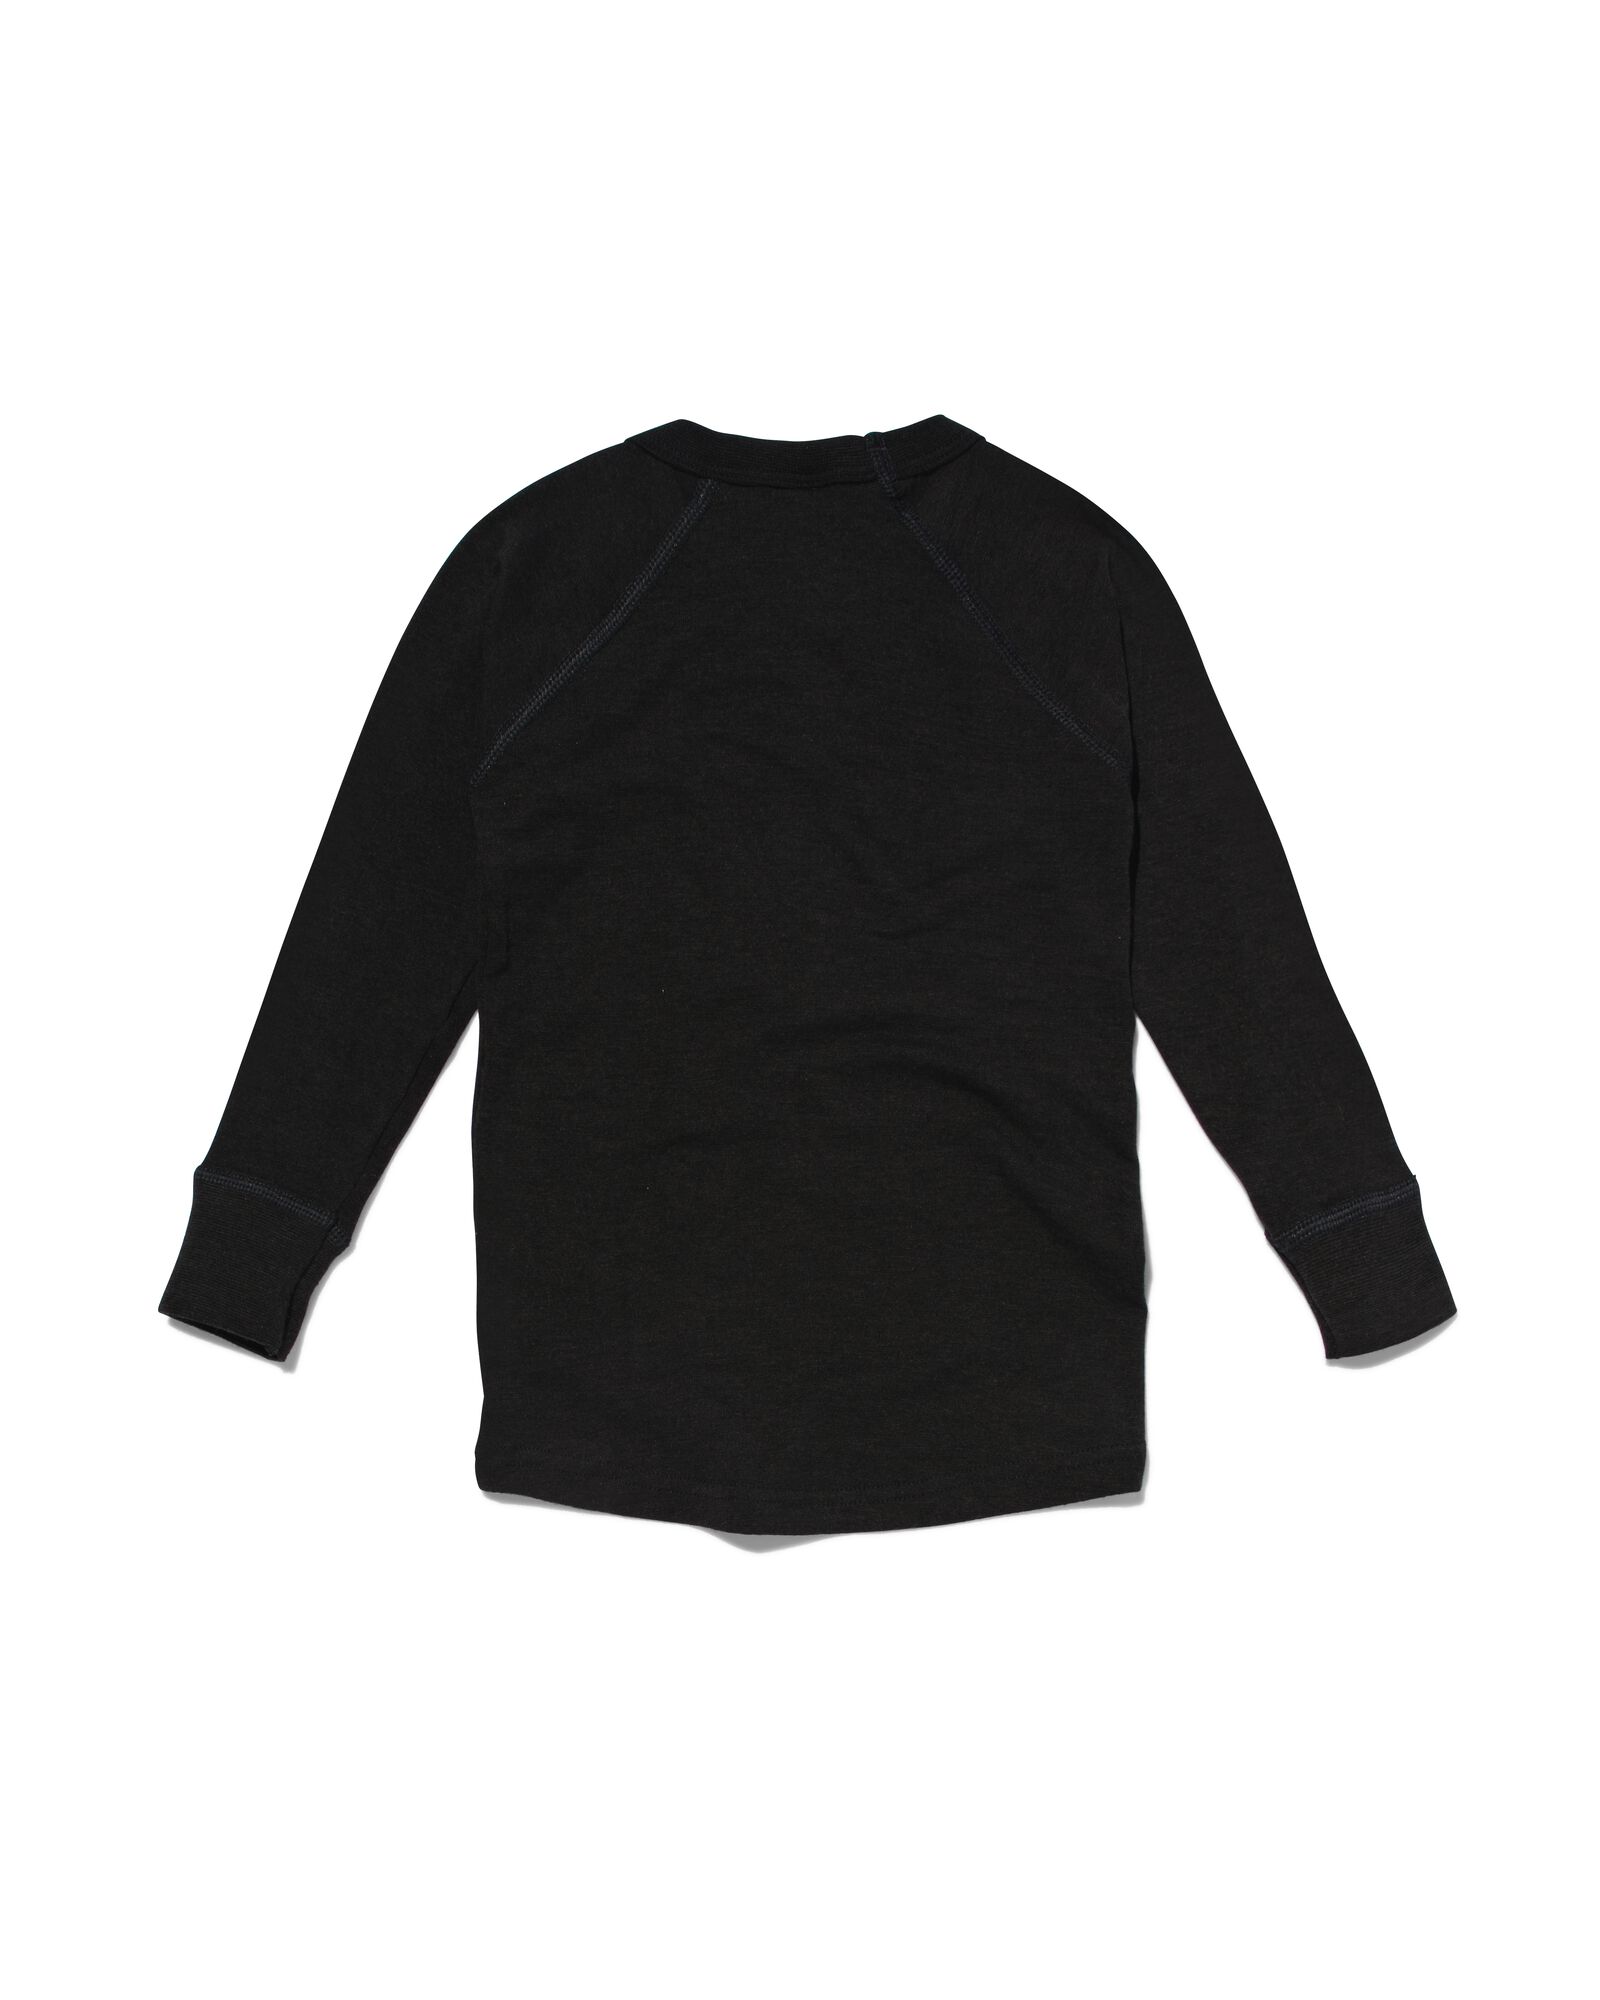 kinder thermo t-shirt zwart 98/104 - 19309211 - HEMA